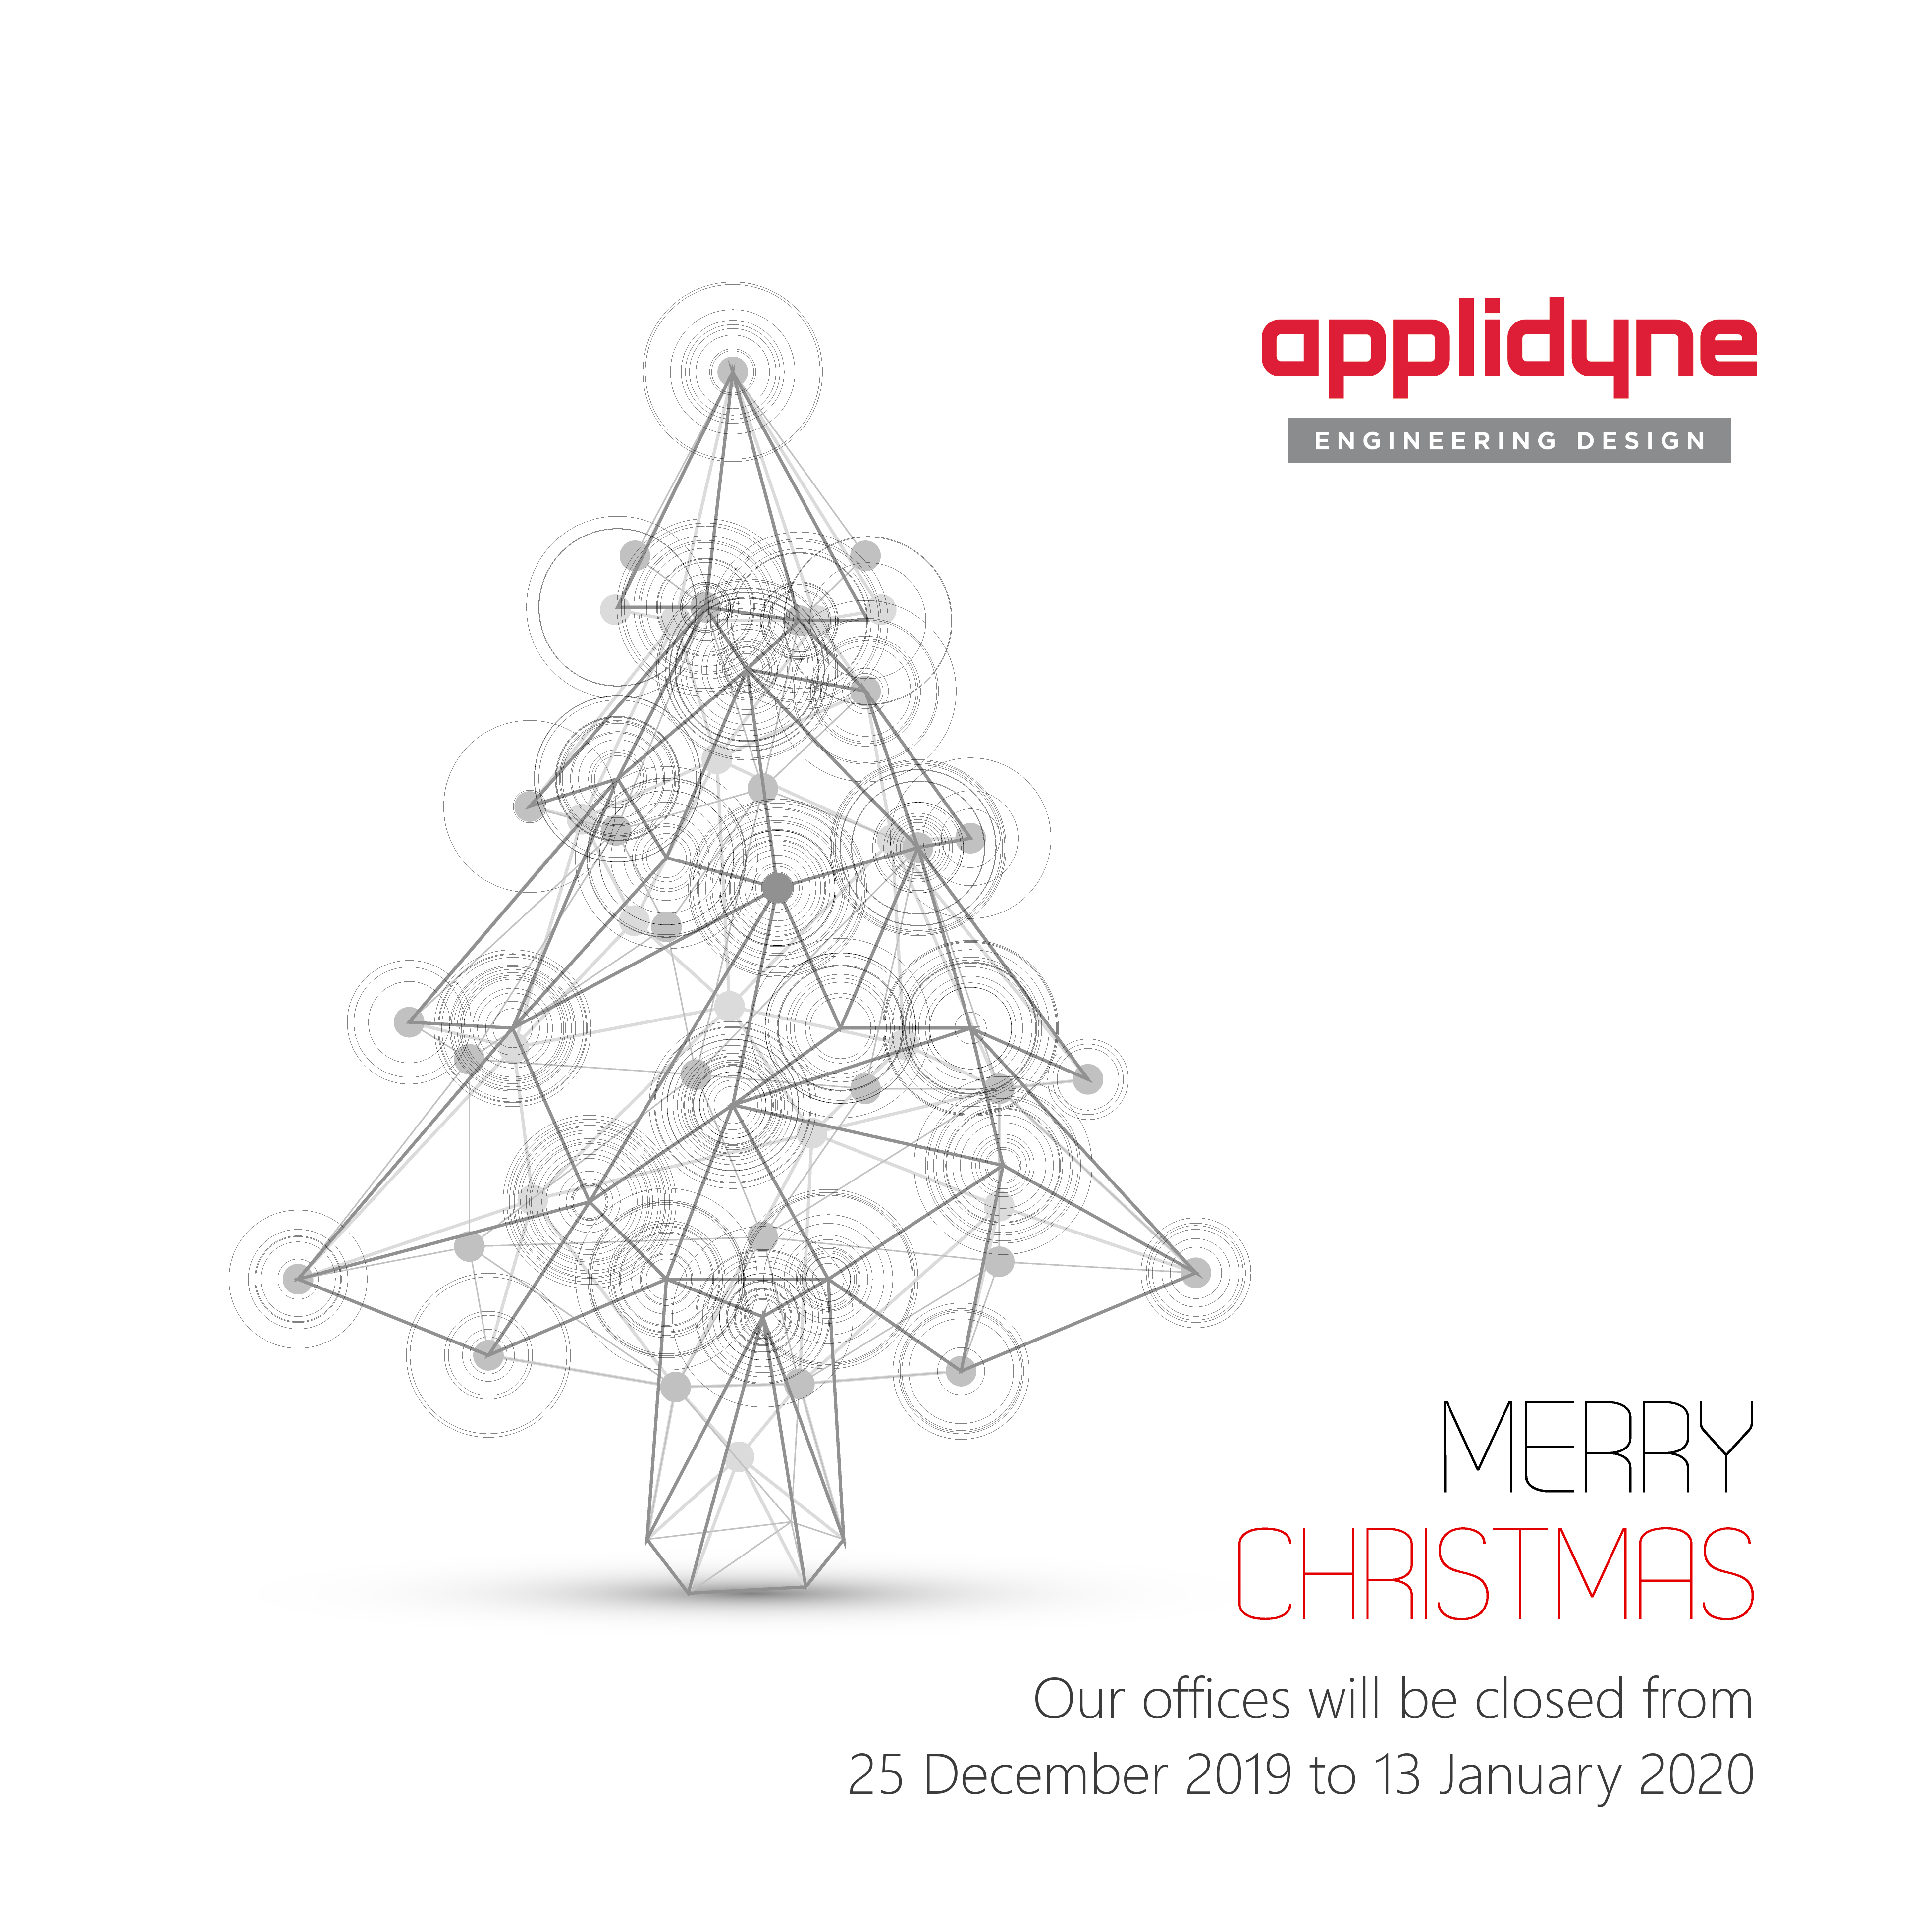 2021 Applidyne Christmas closure